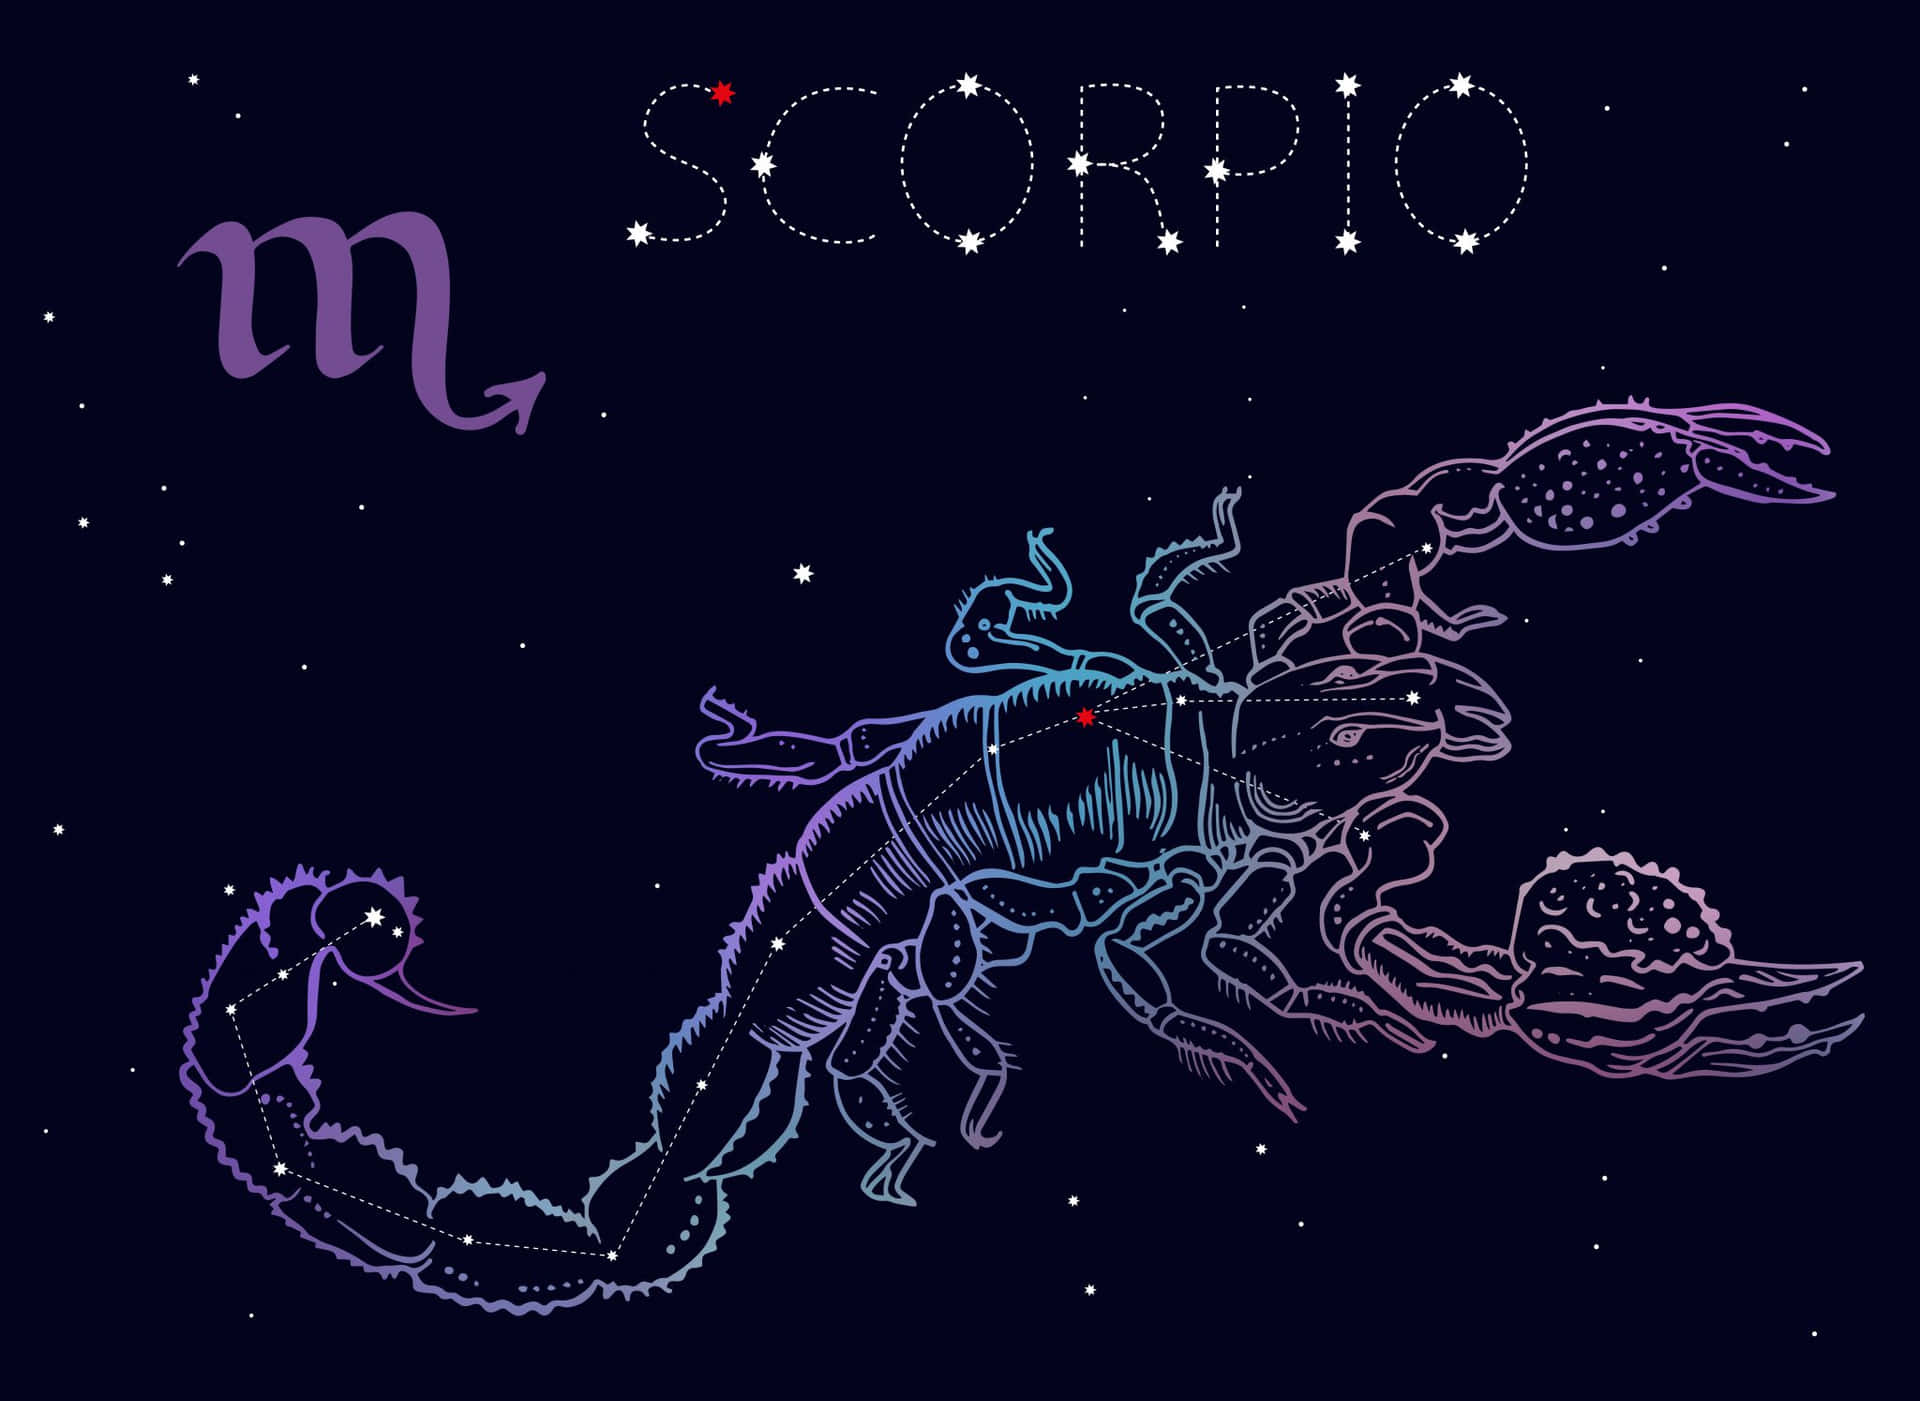 The Scorpio Constellation Illuminated in the Niite Sky